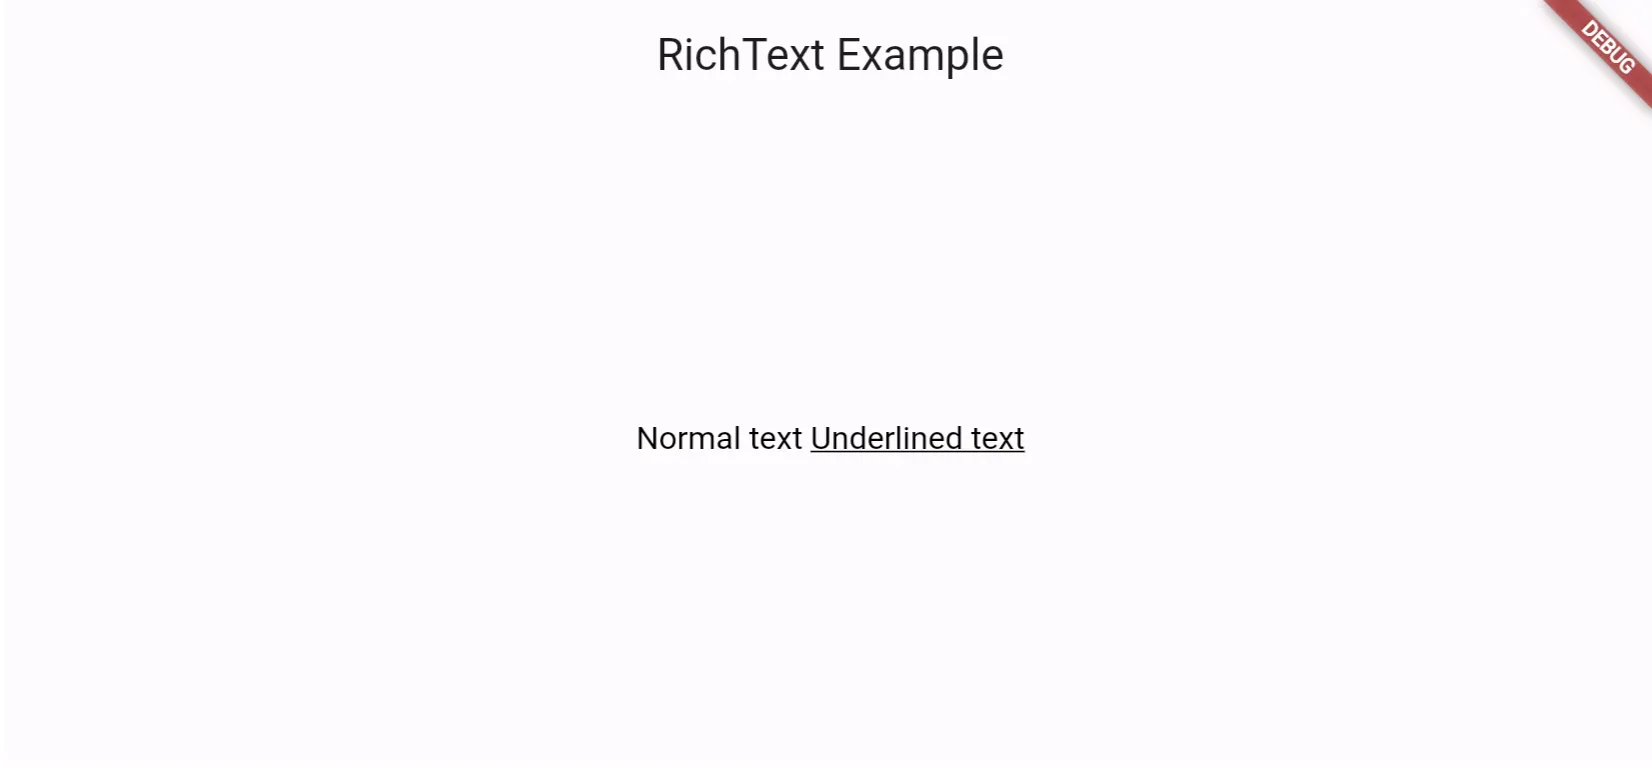 RichText Example